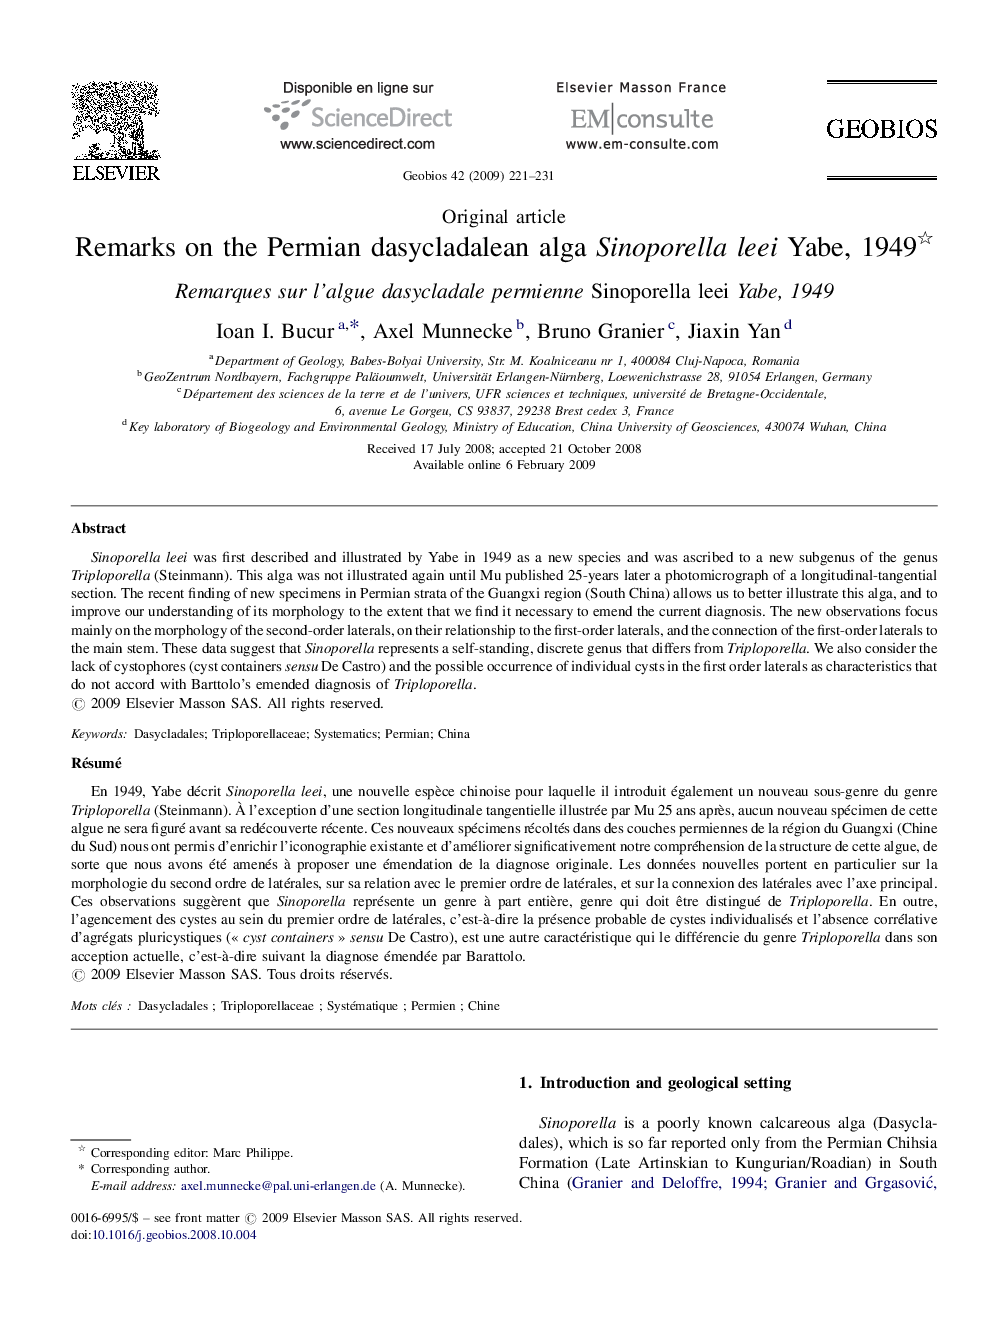 Remarks on the Permian dasycladalean alga Sinoporella leei Yabe, 1949